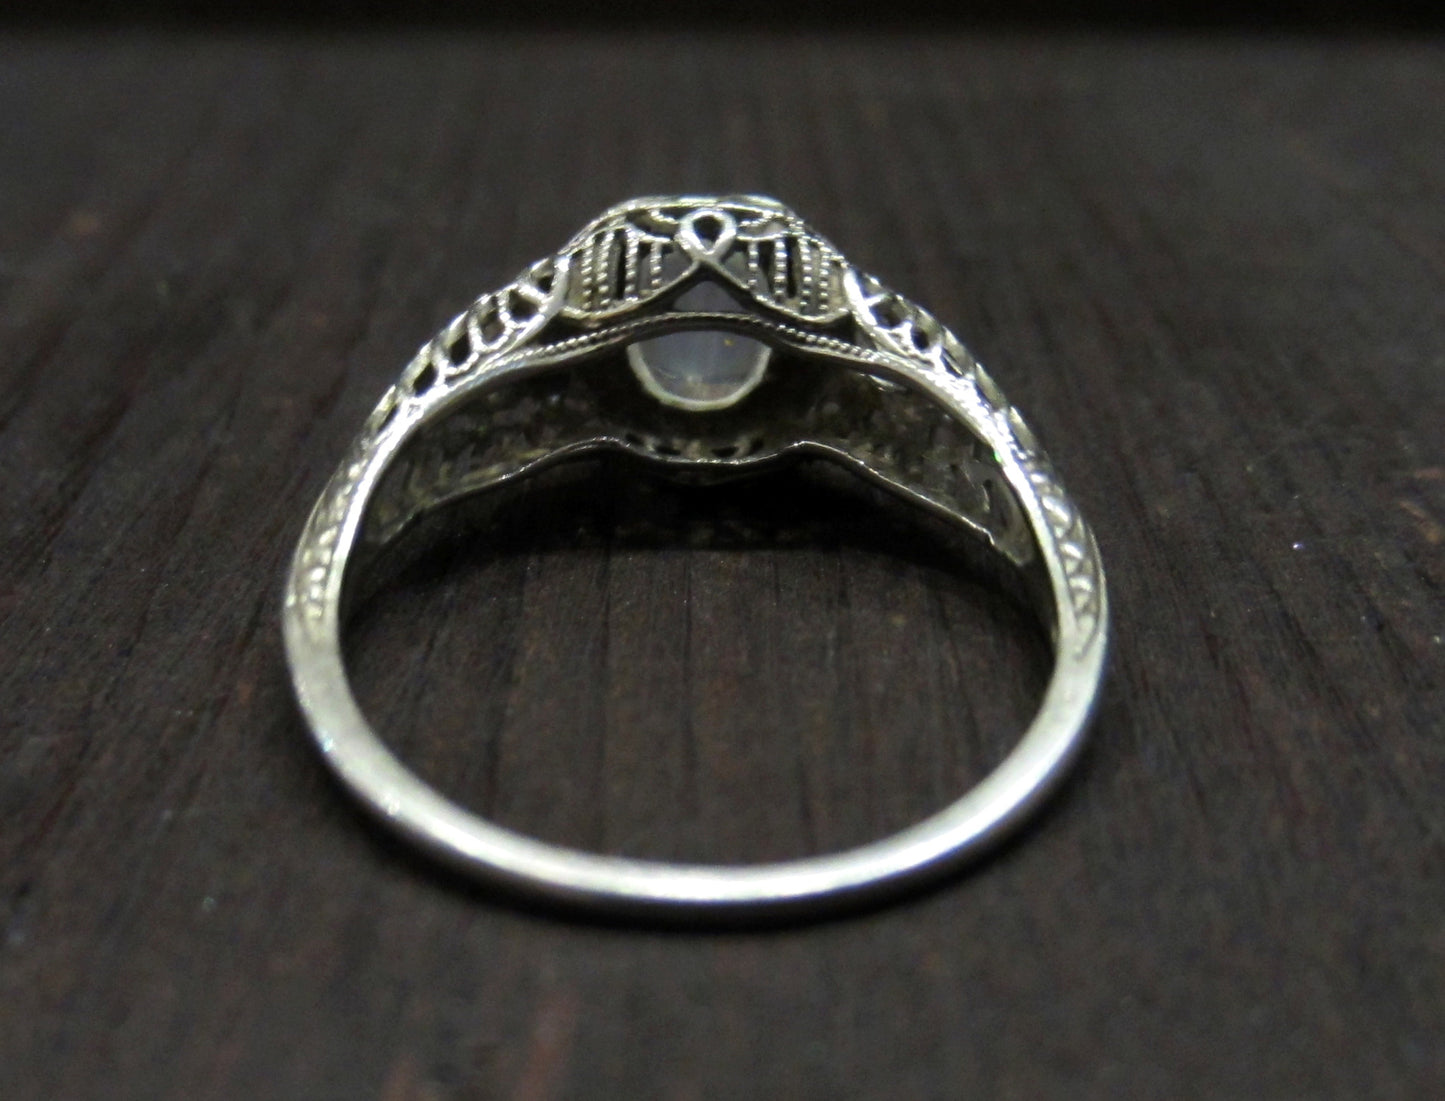 SOLD--Edwardian Moonstone and Old European Diamond Ring 18k, c. 1915